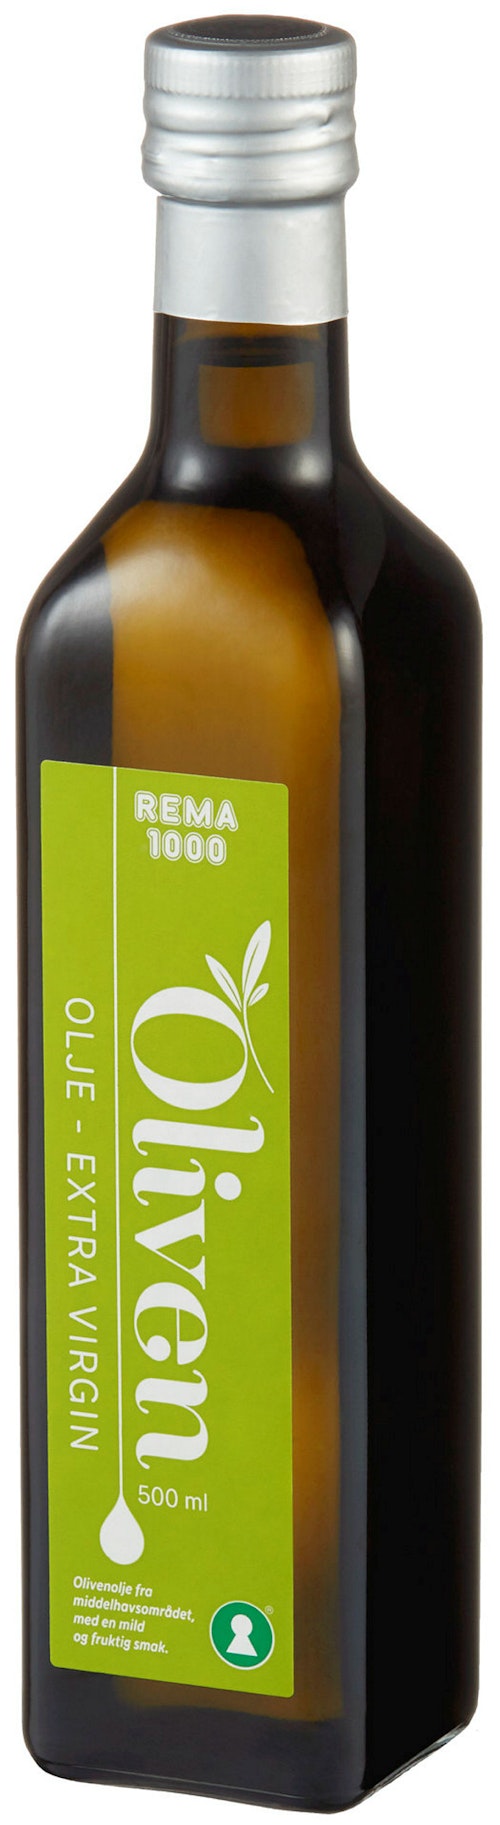 REMA 1000 Olivenolje Extra Virgin